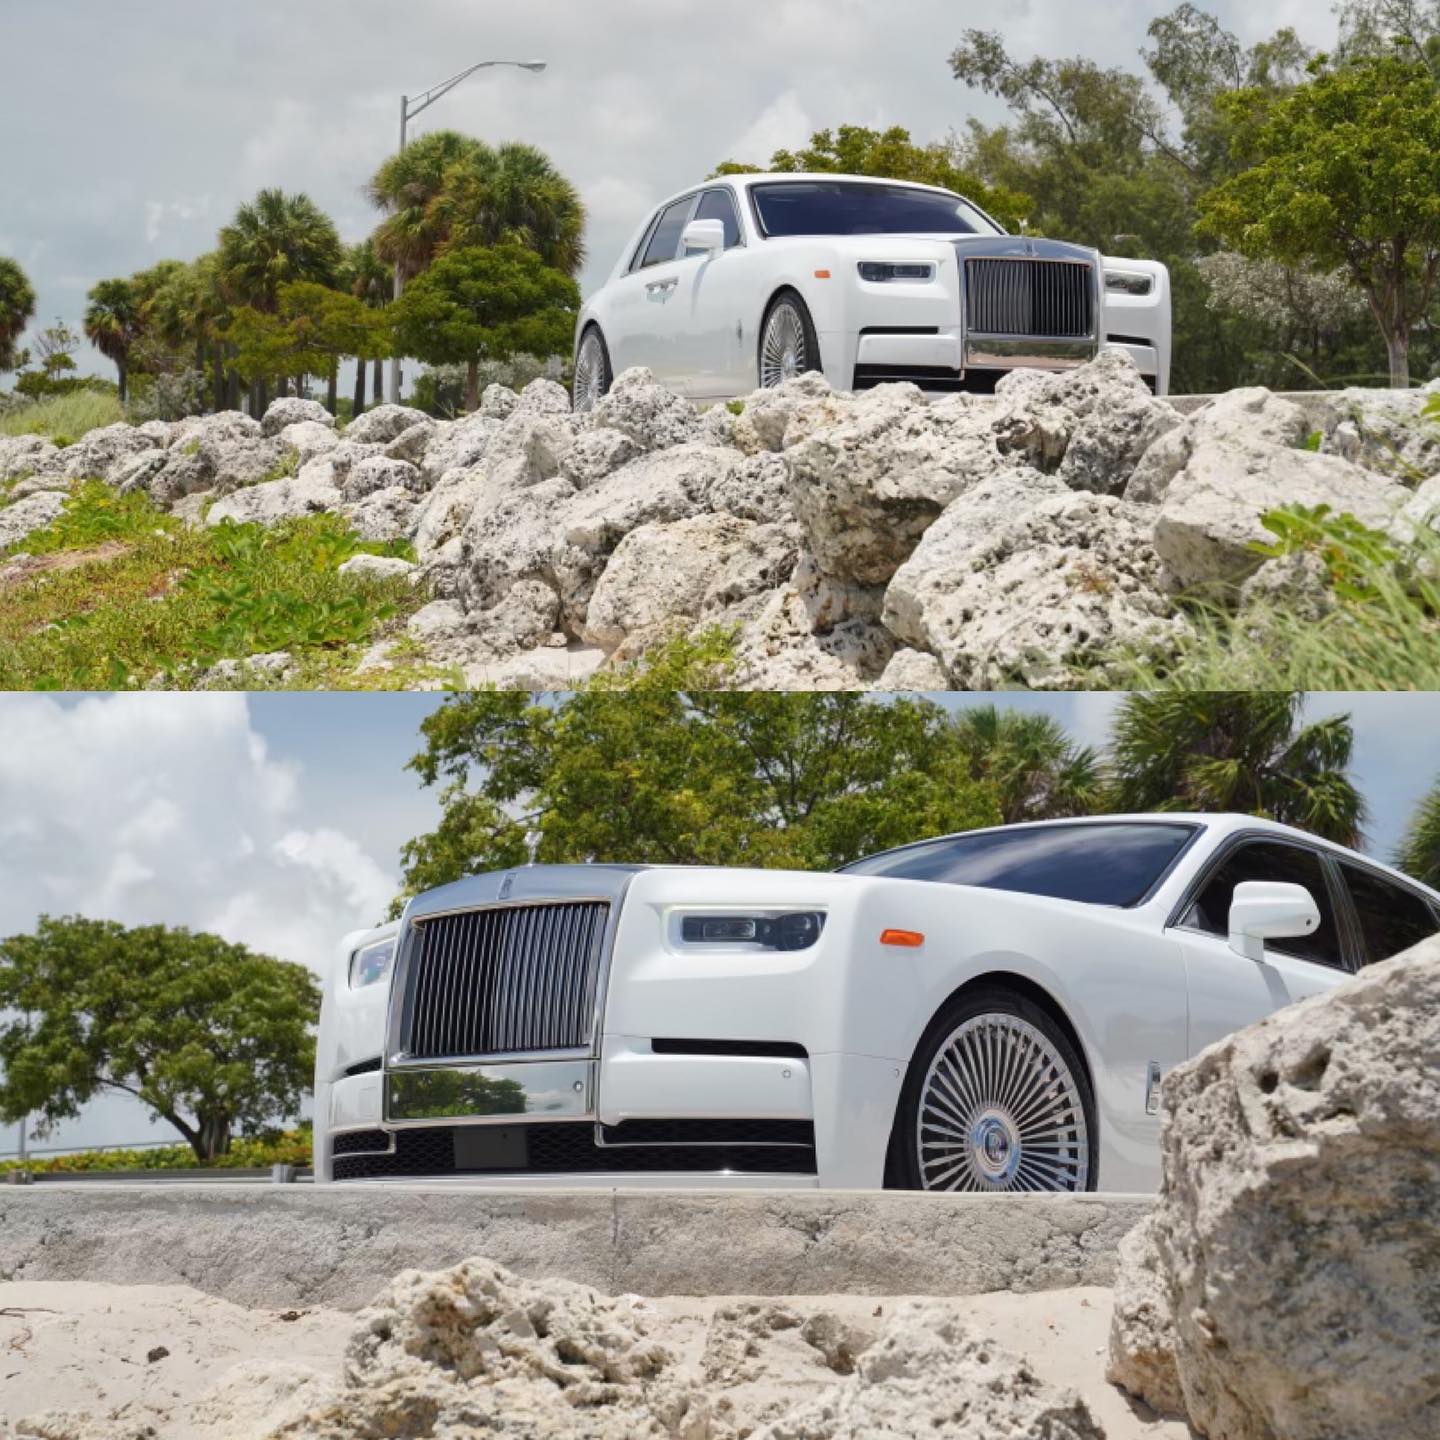 A Rolls-Royce Phantom that is an Hermès bag on wheels